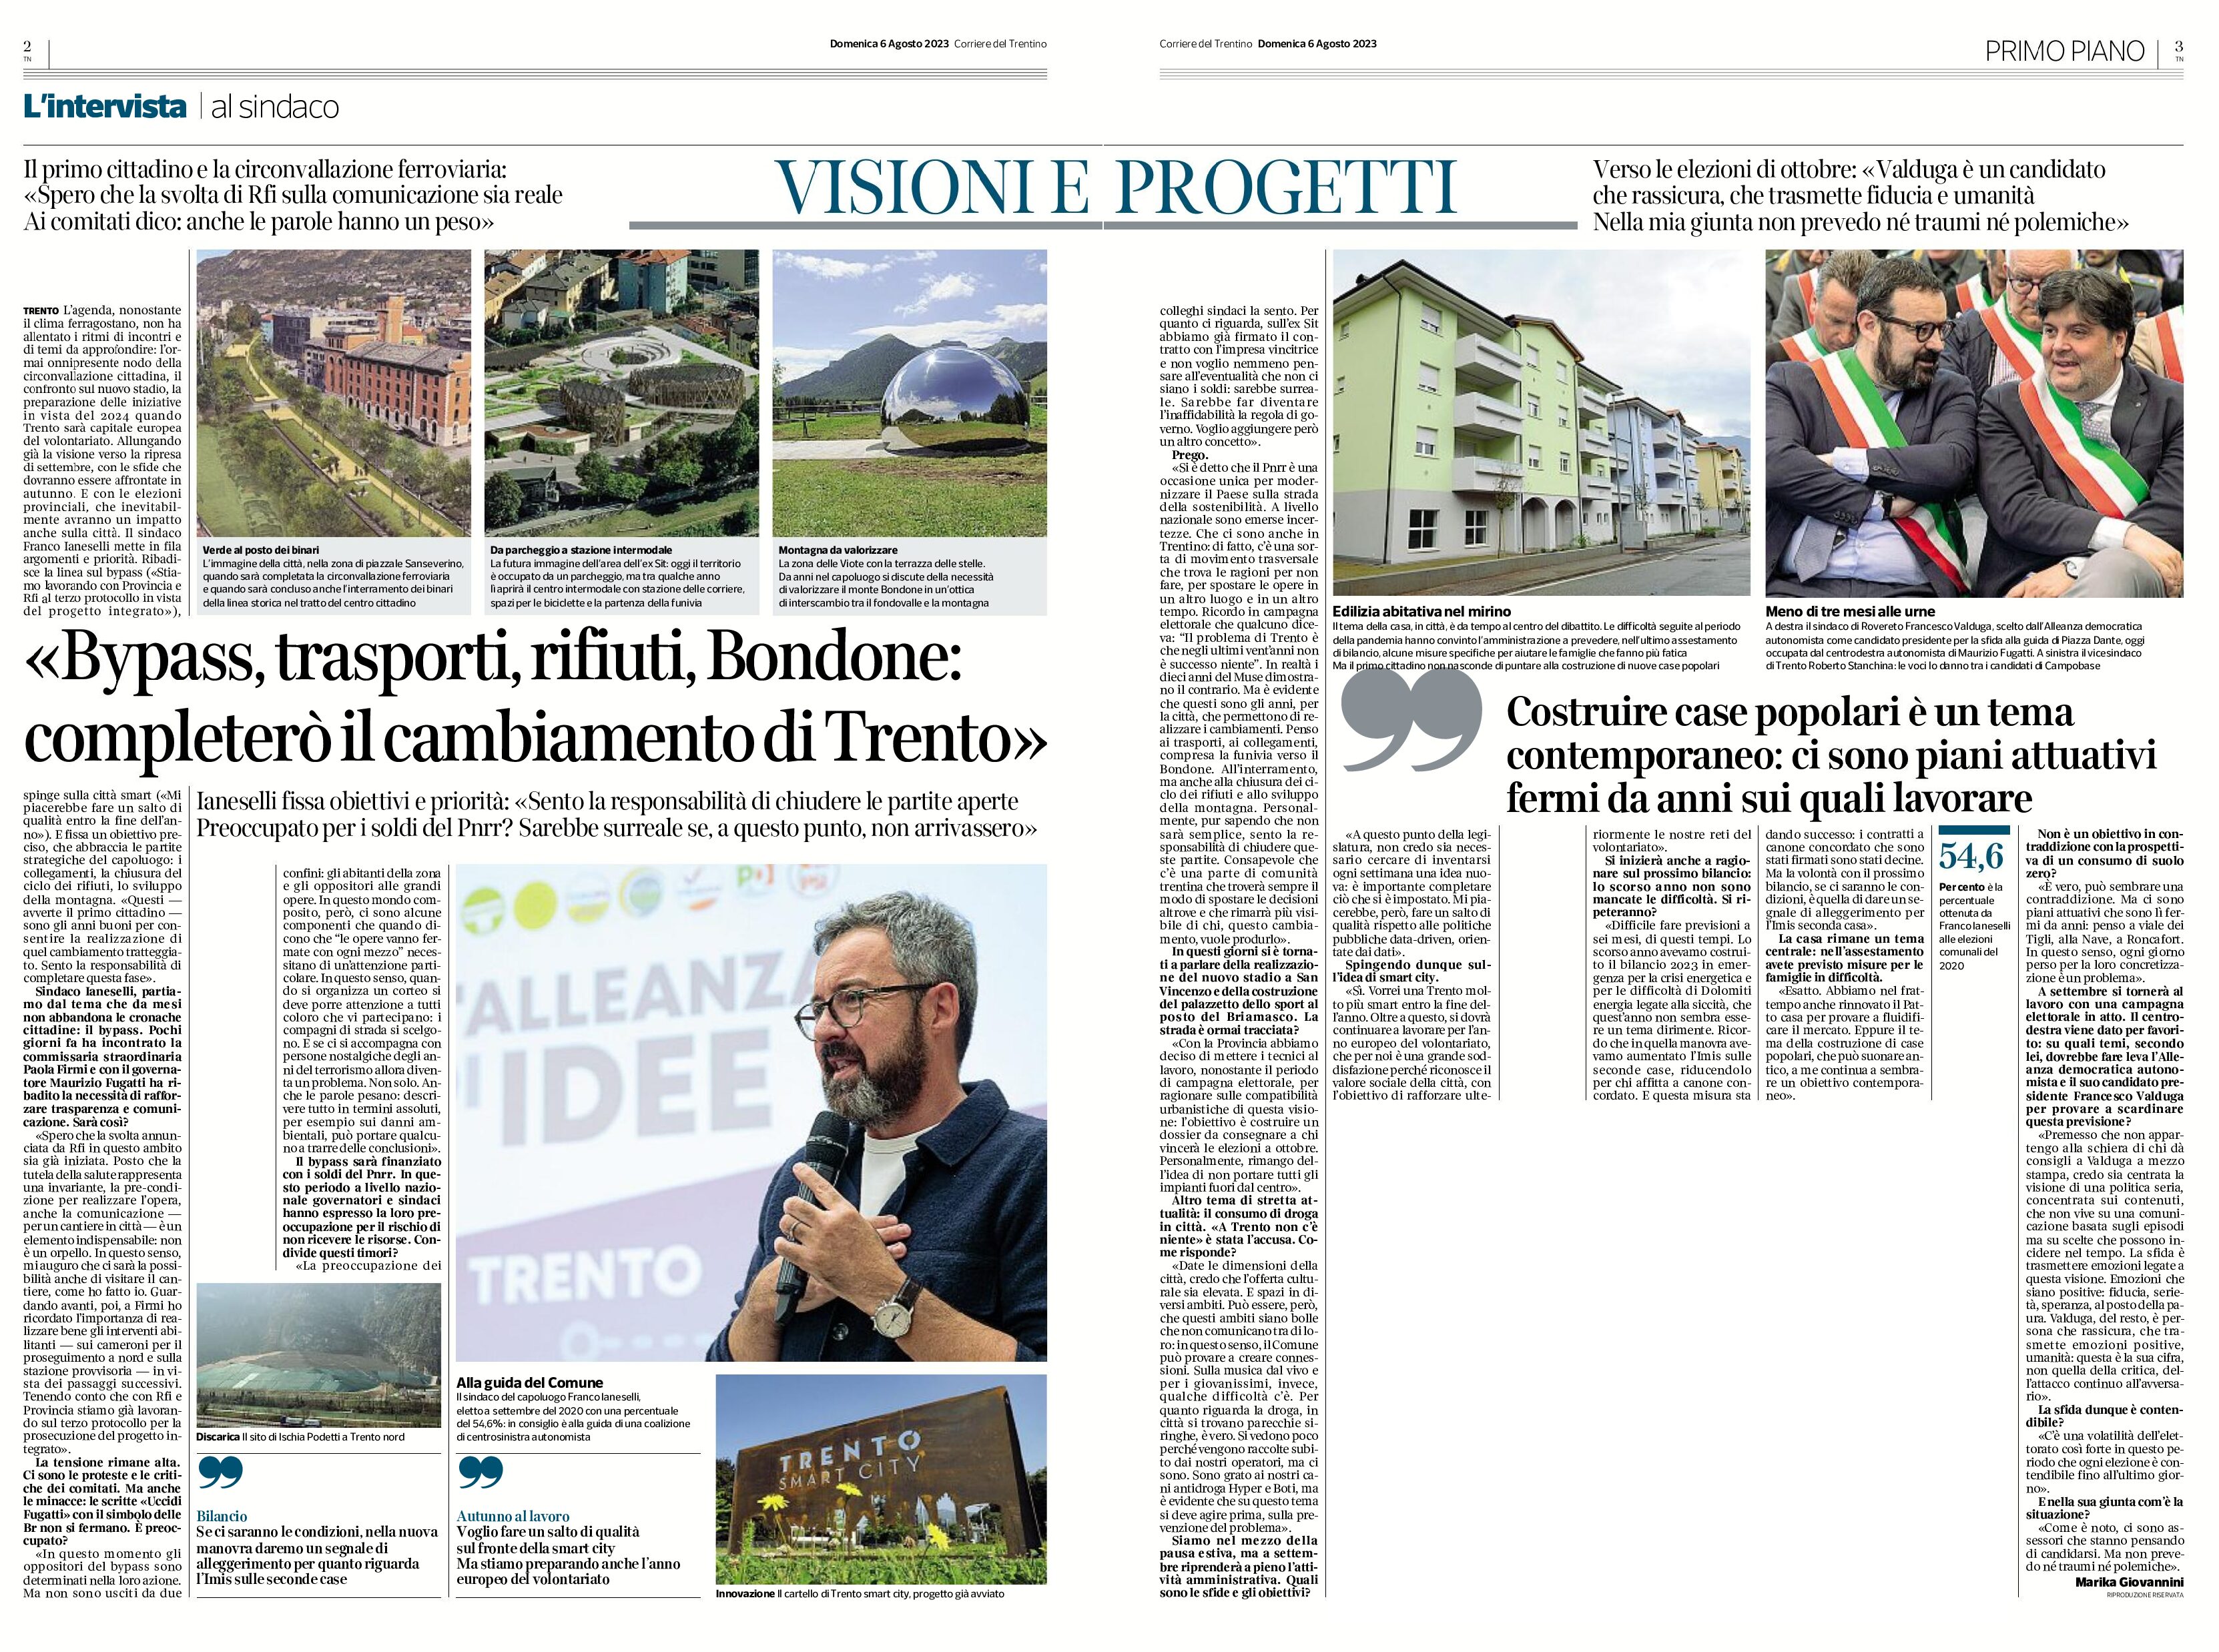 Intervista al sindaco: Trento bypass, trasporti, rifiuti, Bondone, case popolari